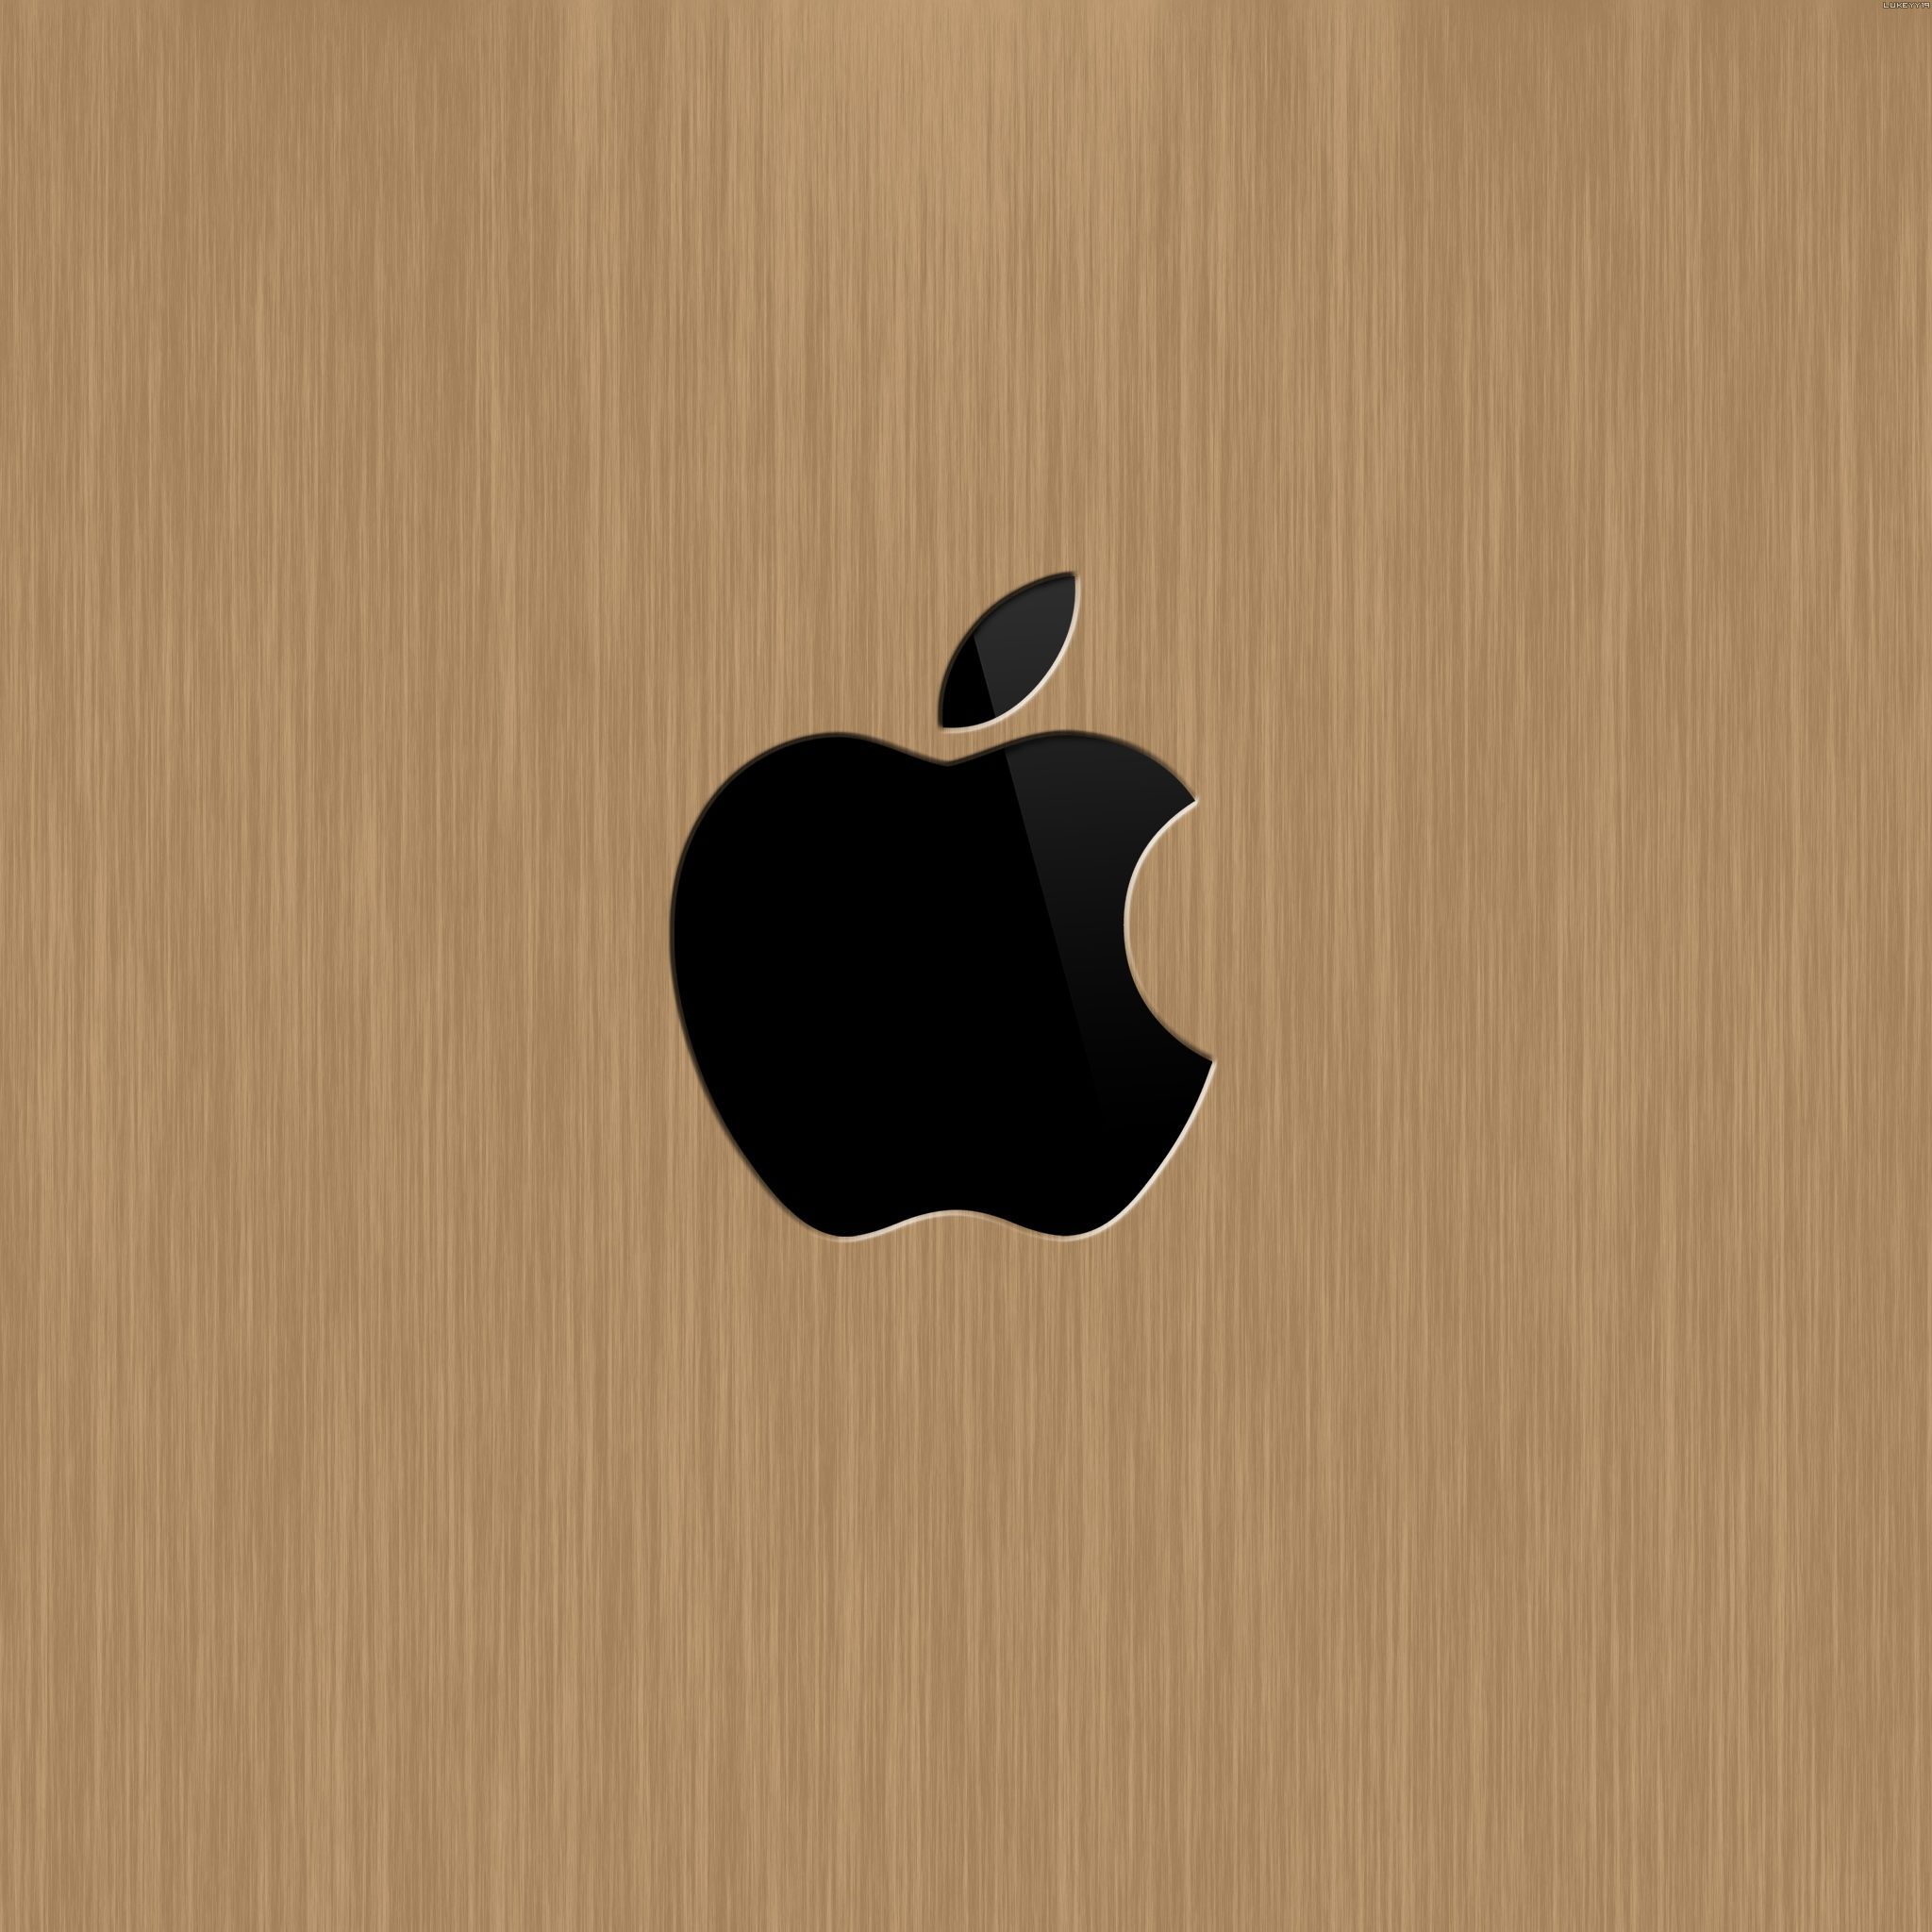 iPad 3 Wallpaper Apple Logo 02 | iPad Air Wallpapers, iPad Air ...